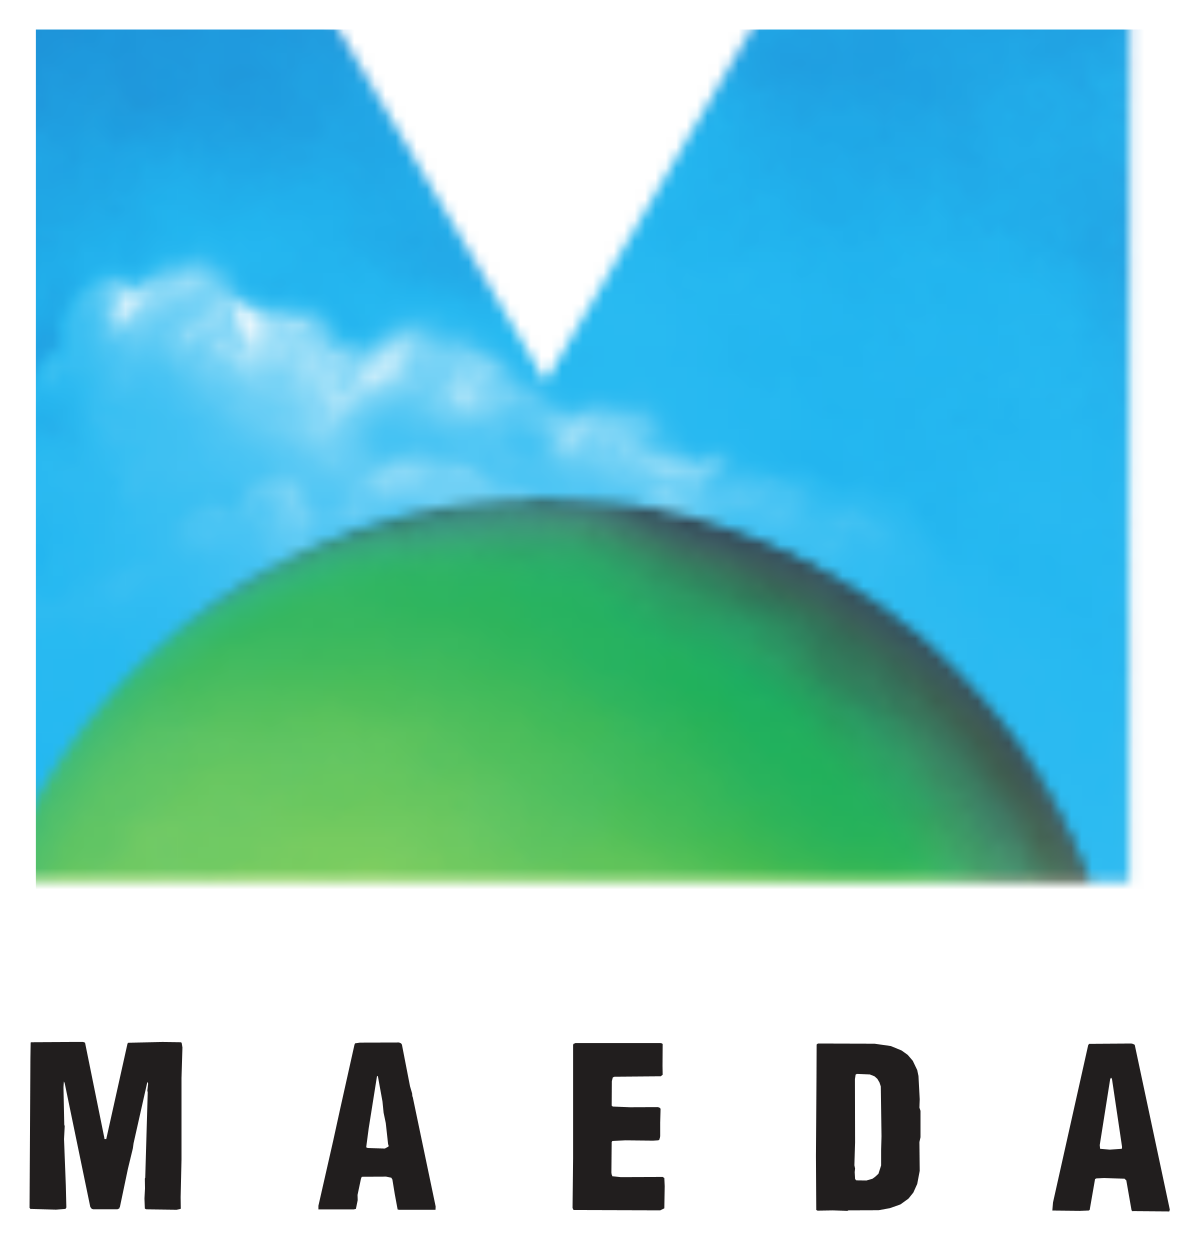 Maeda Corporation